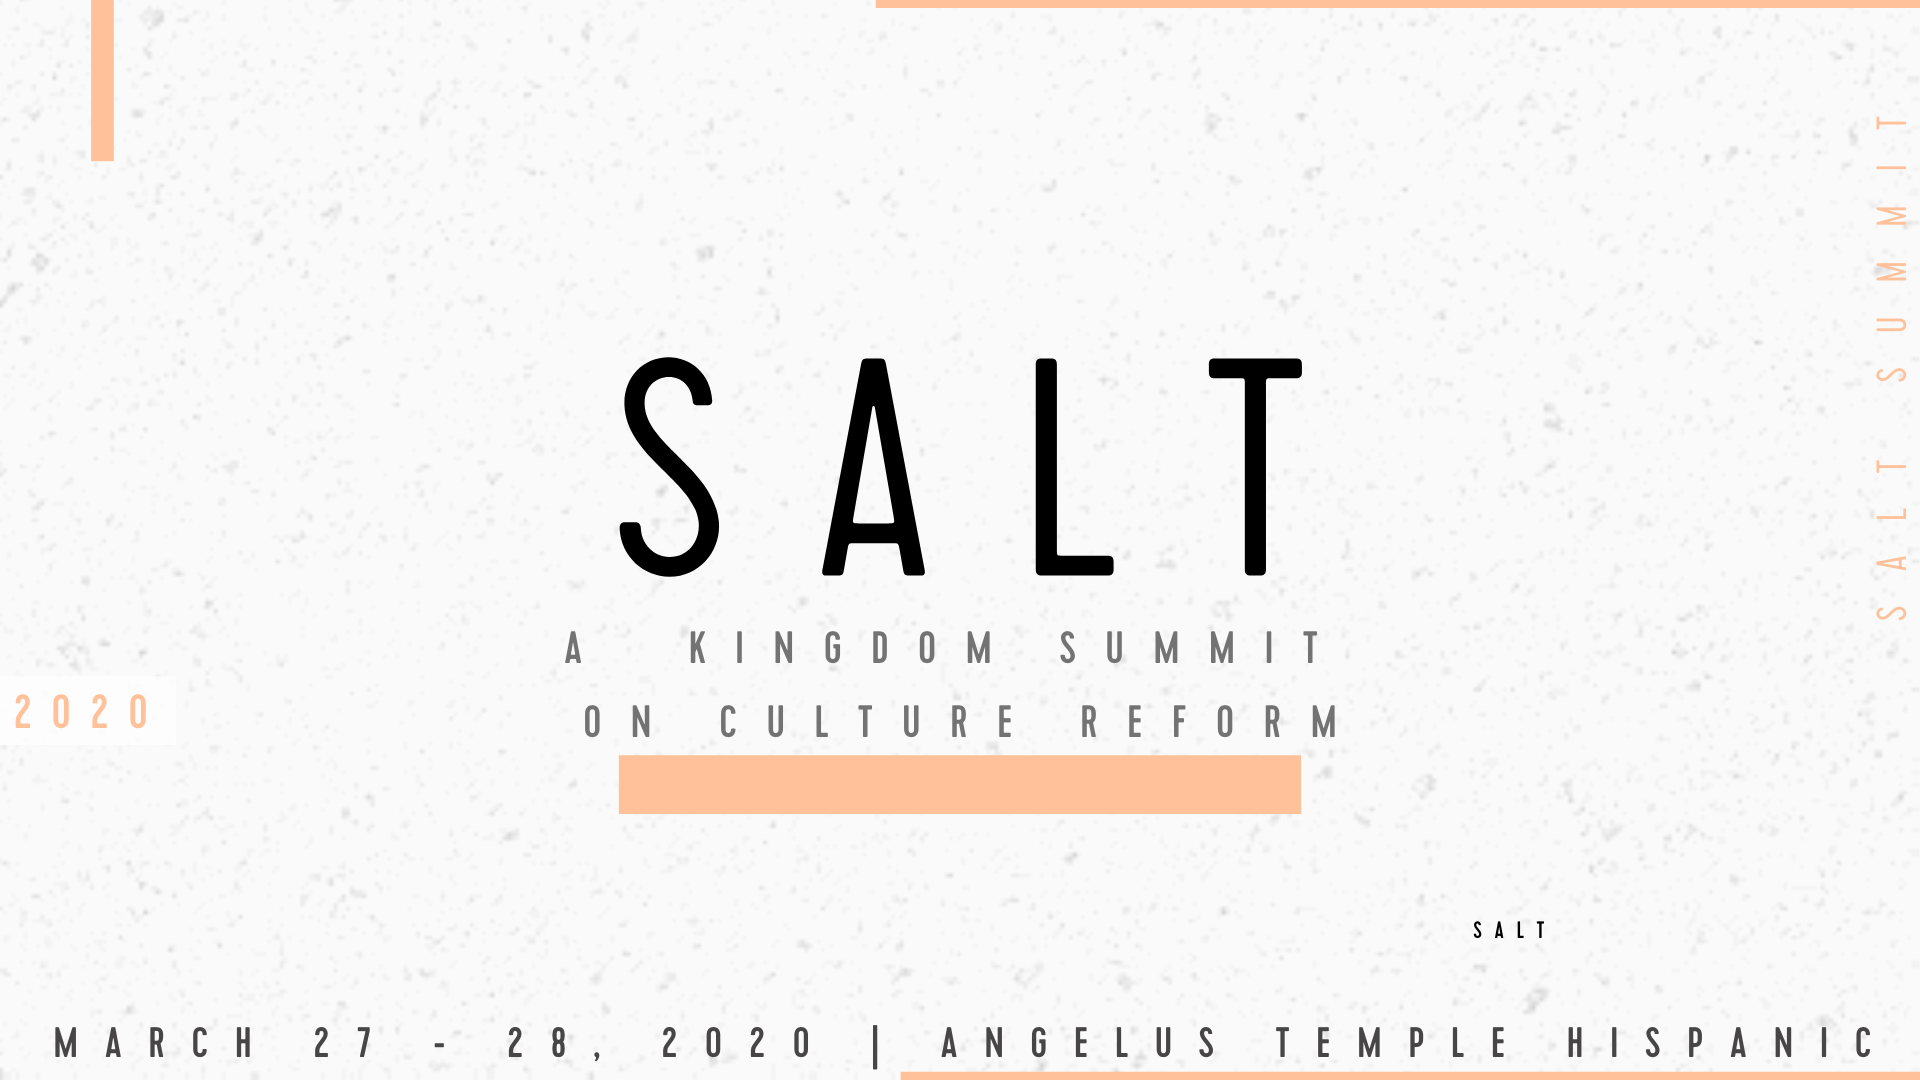 SALT: A Kingdom Summit on Culture Reform